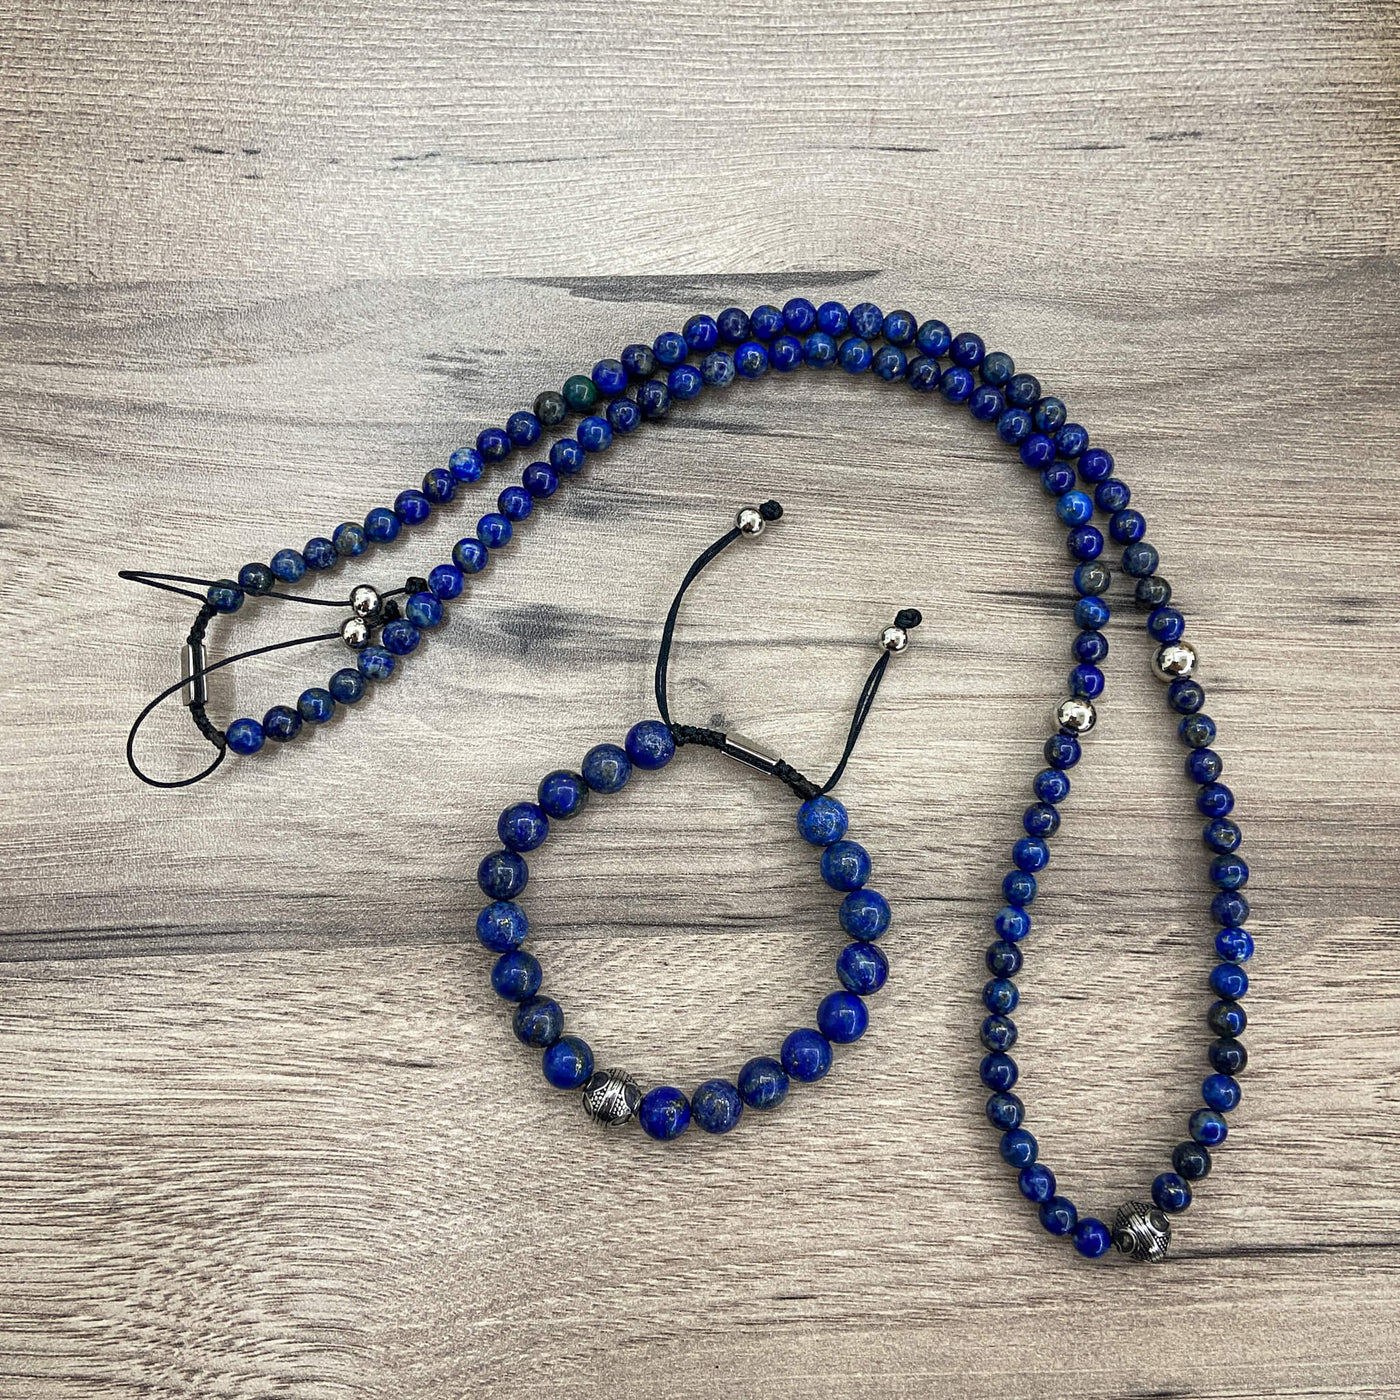 The Lapis Lazuli CYL Necklace